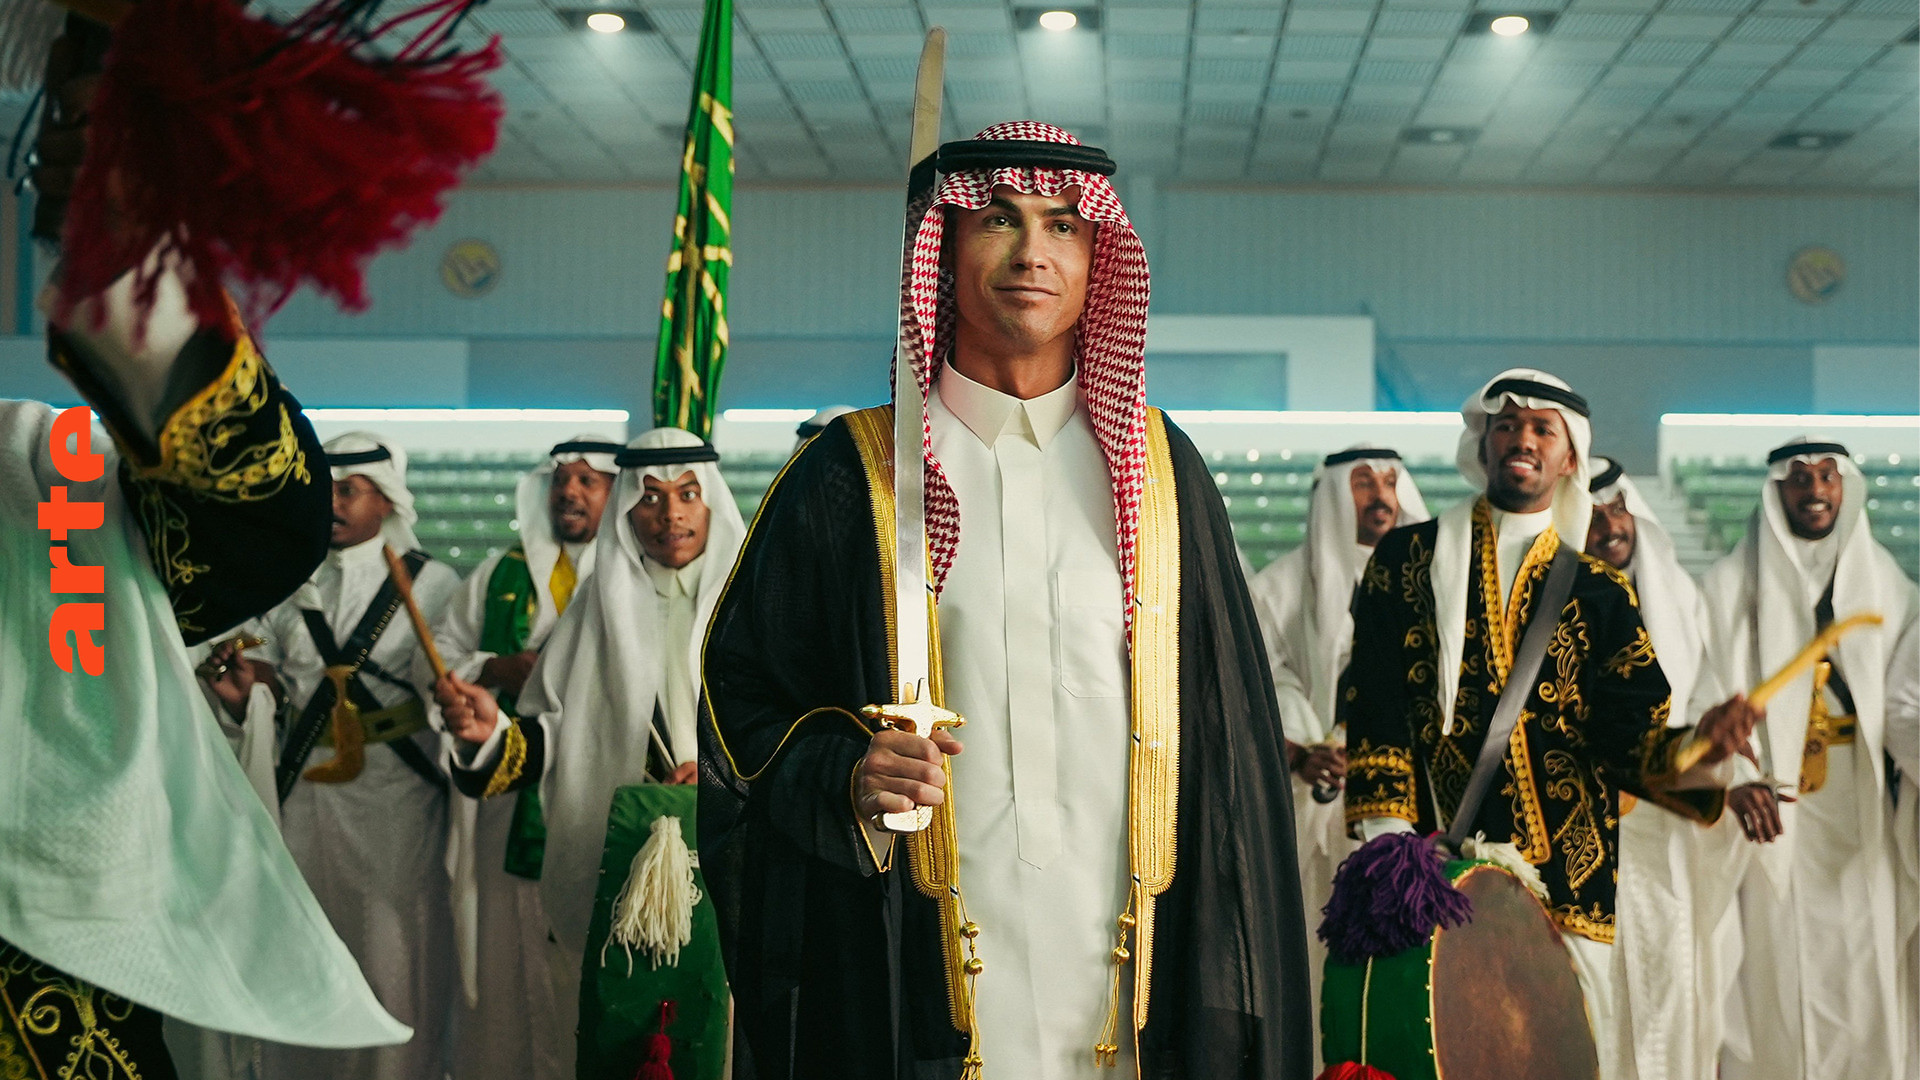 Fußballer-Parade in Saudi-Arabien